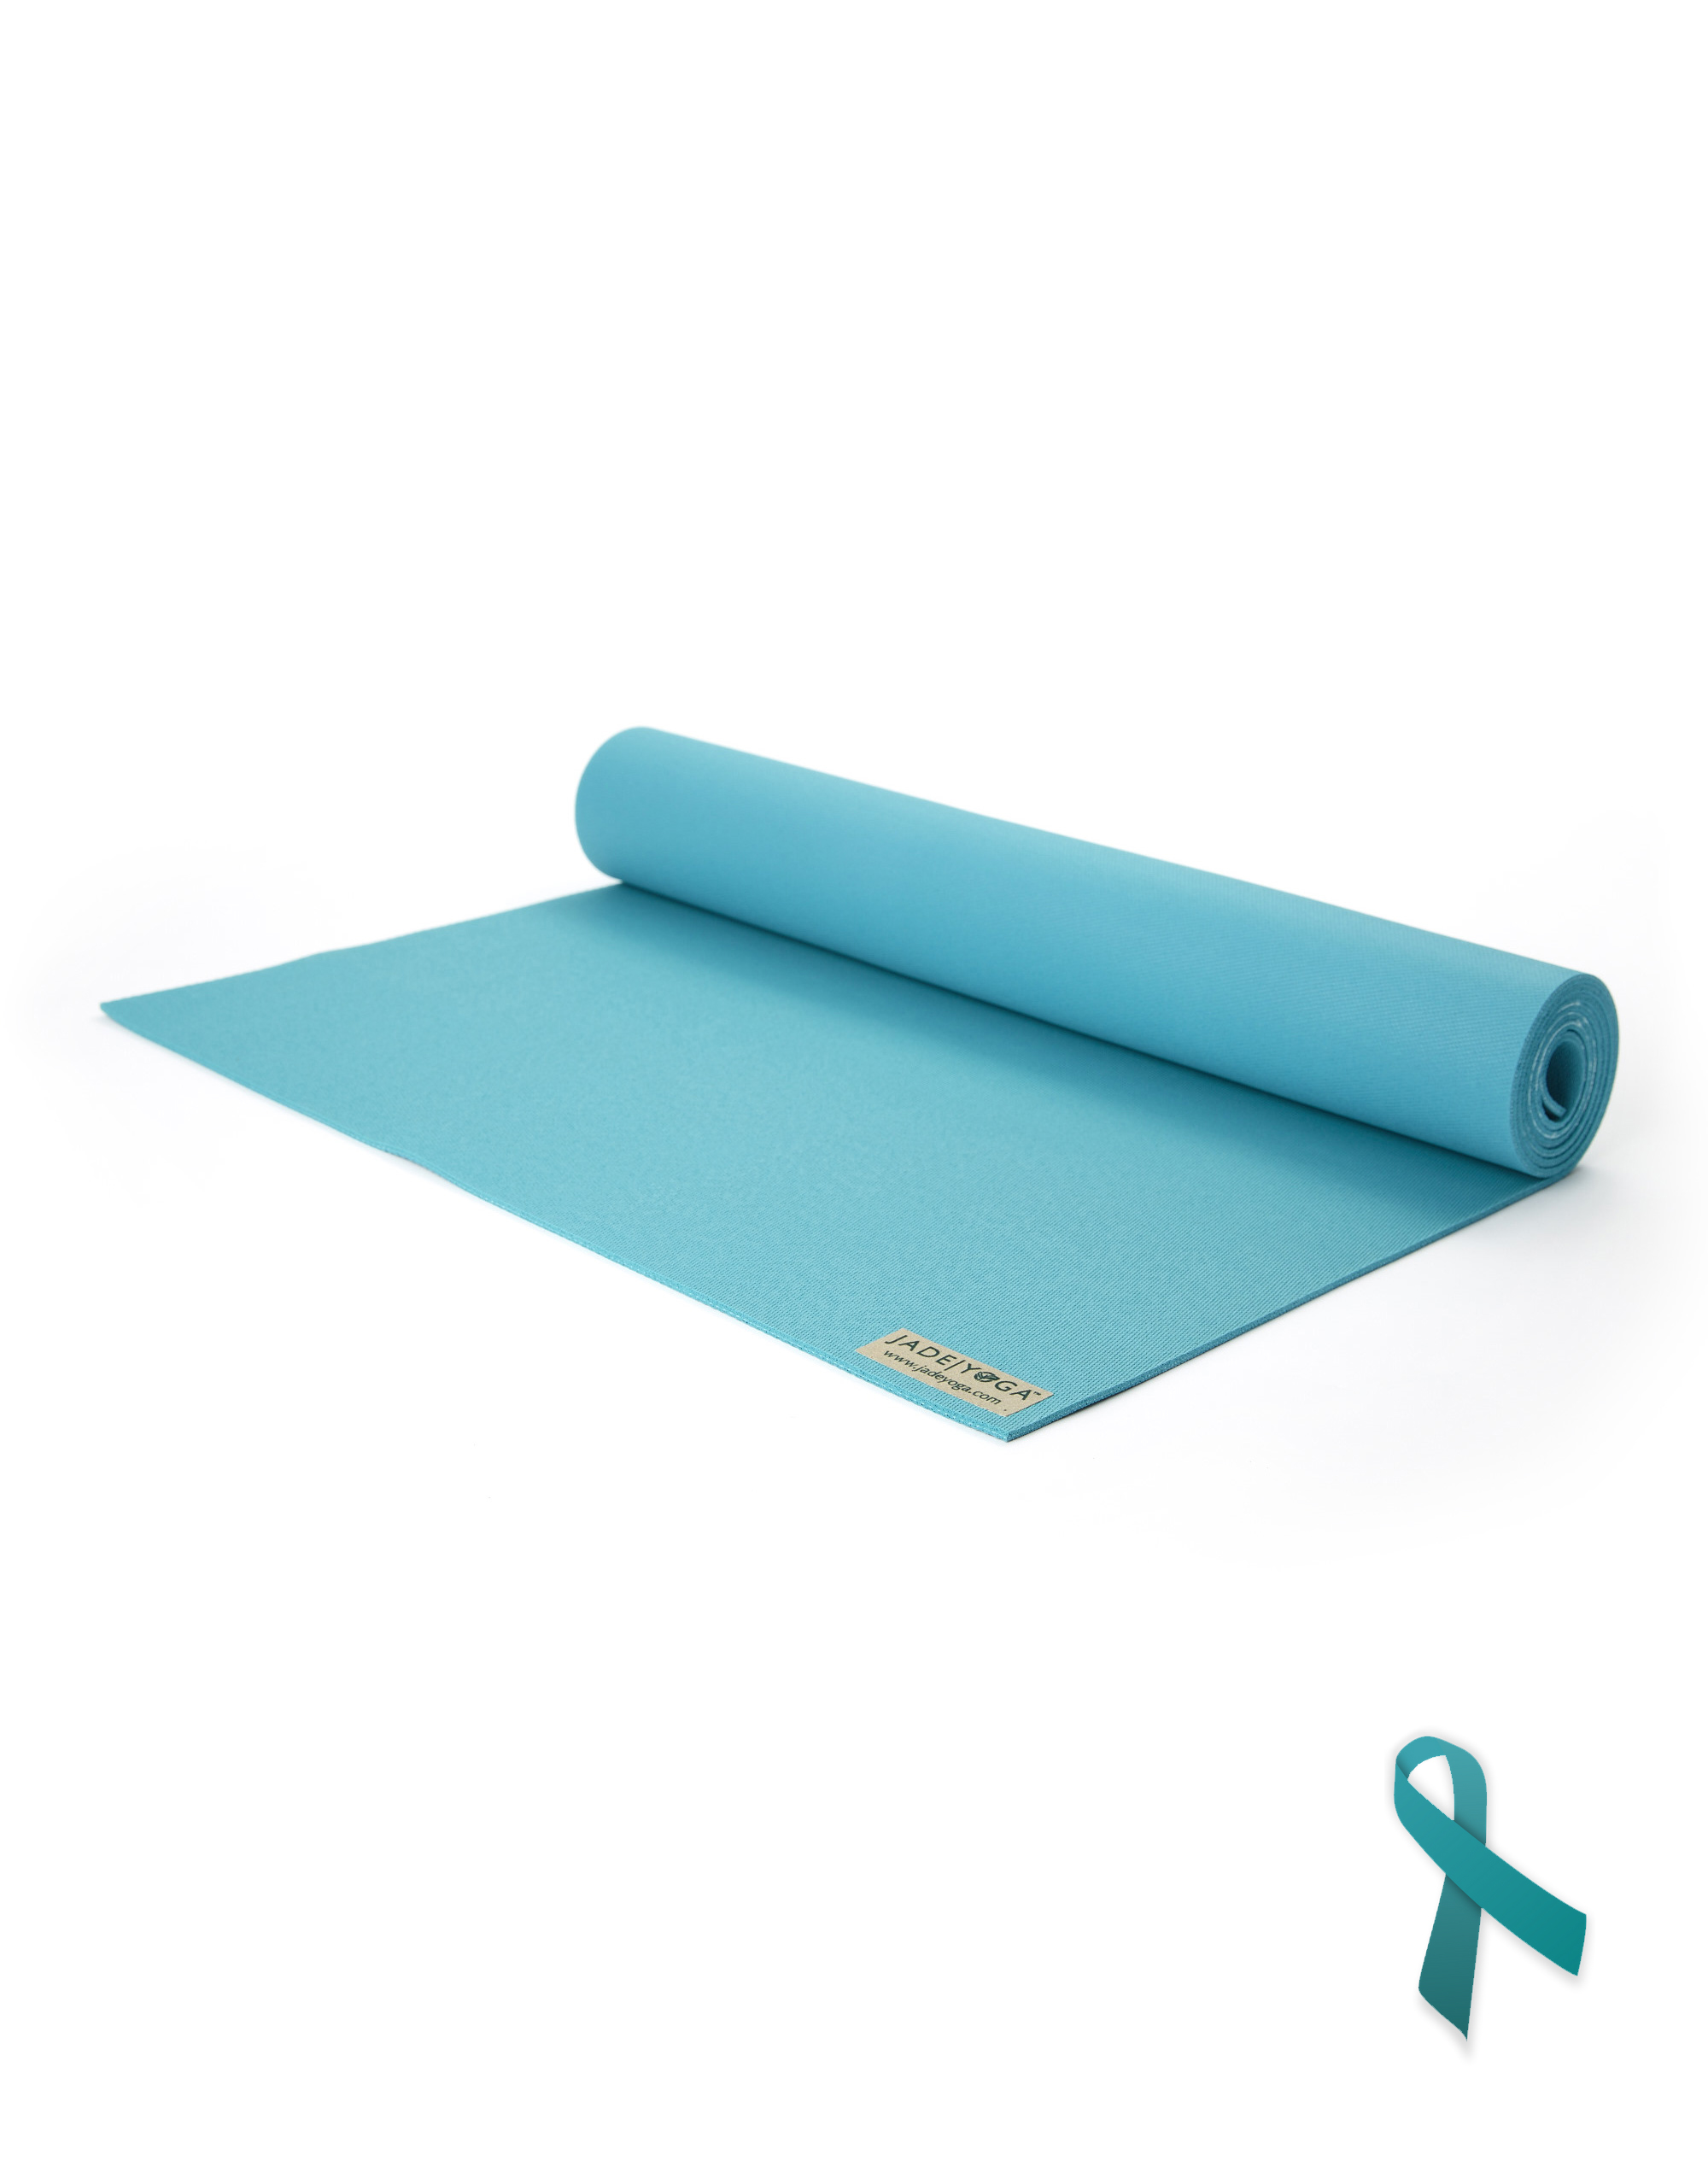 Buy JadeYogaHarmony Yoga Mat - Durable & Thick Gym Fitness Mat